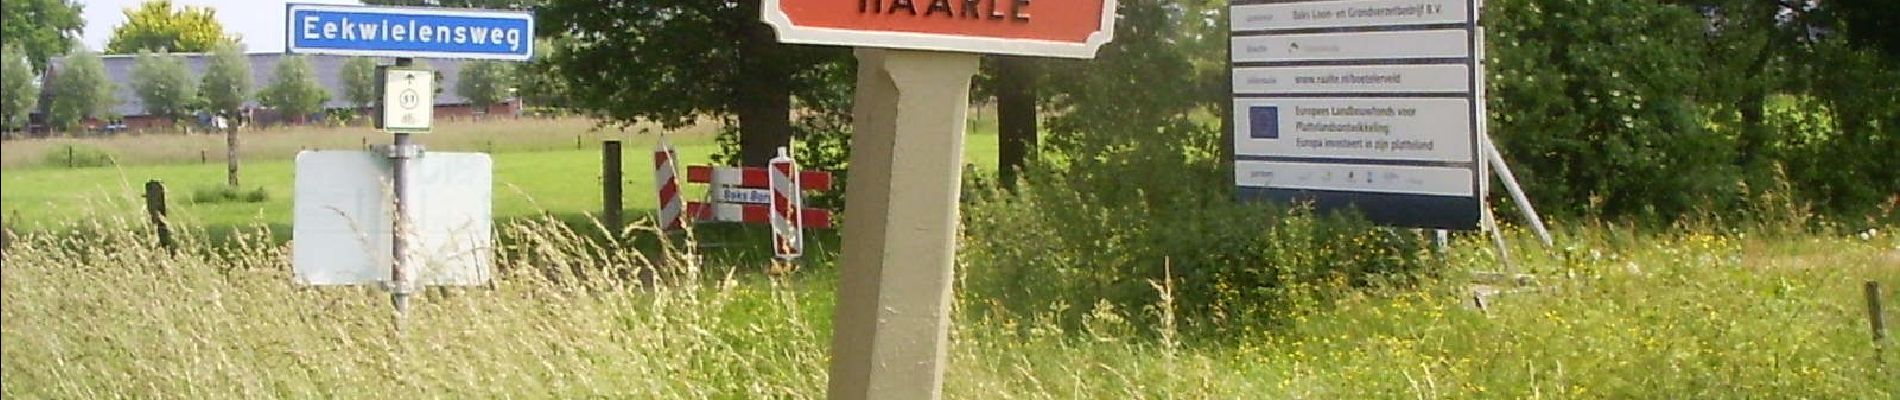 Trail On foot Raalte - WNW Salland - Boetelerveld - gele route - Photo